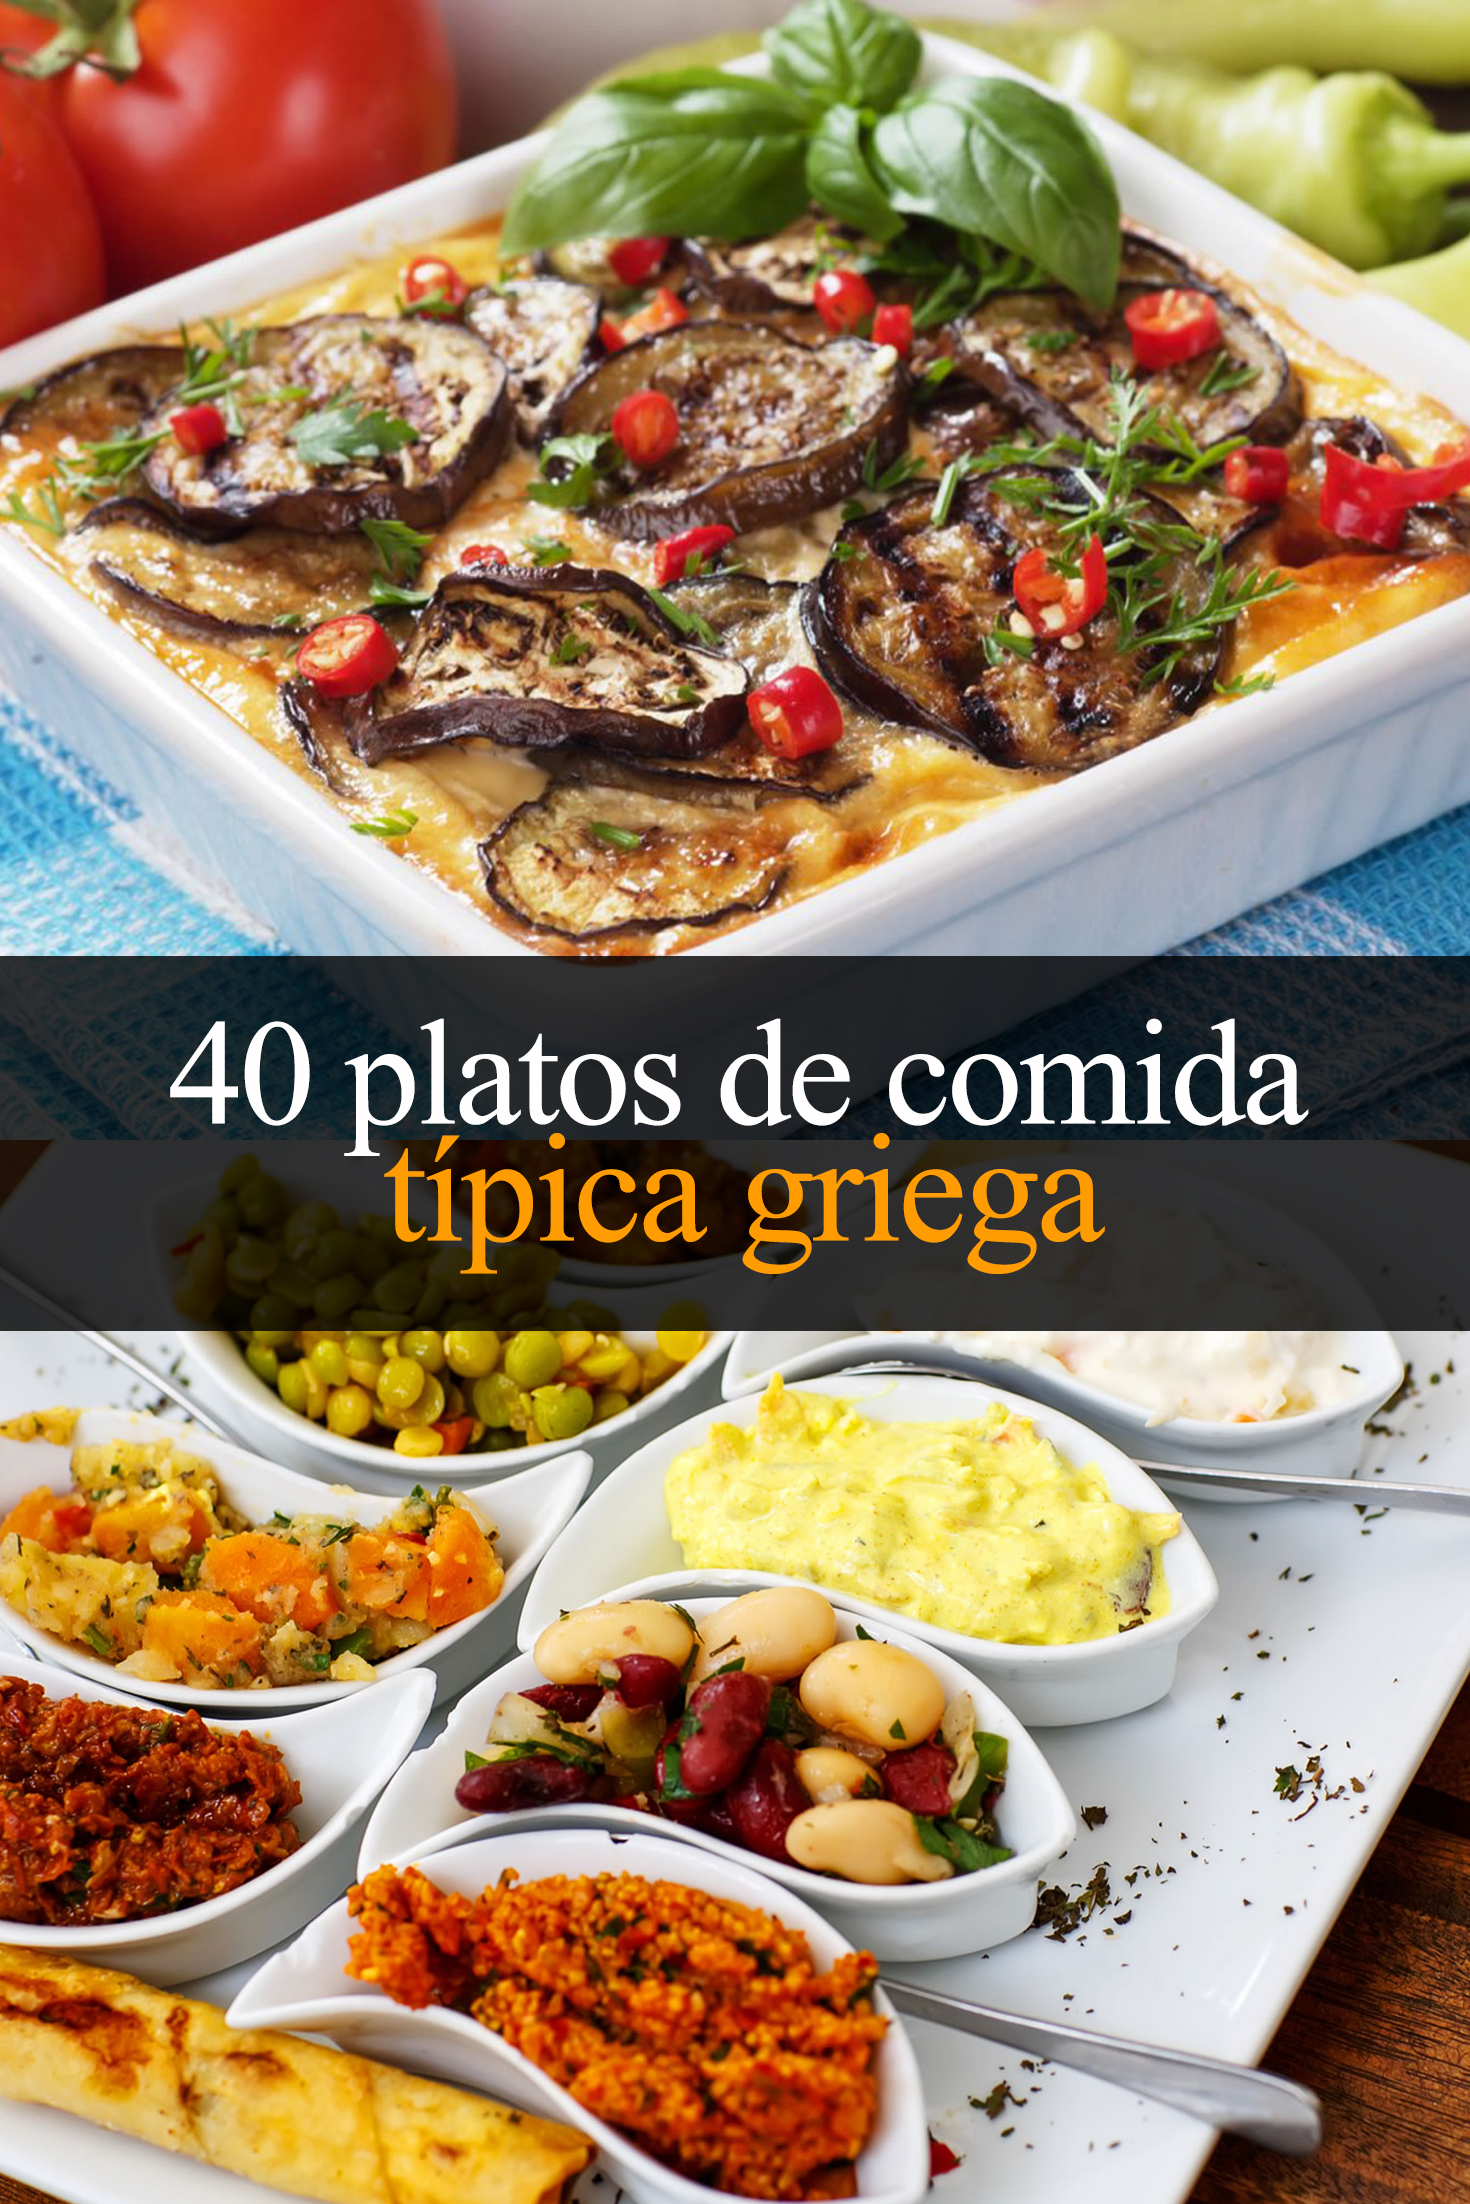 domingo cerca patata 40 platos de comida típica griega que debes probar - Tips Para Tu Viaje